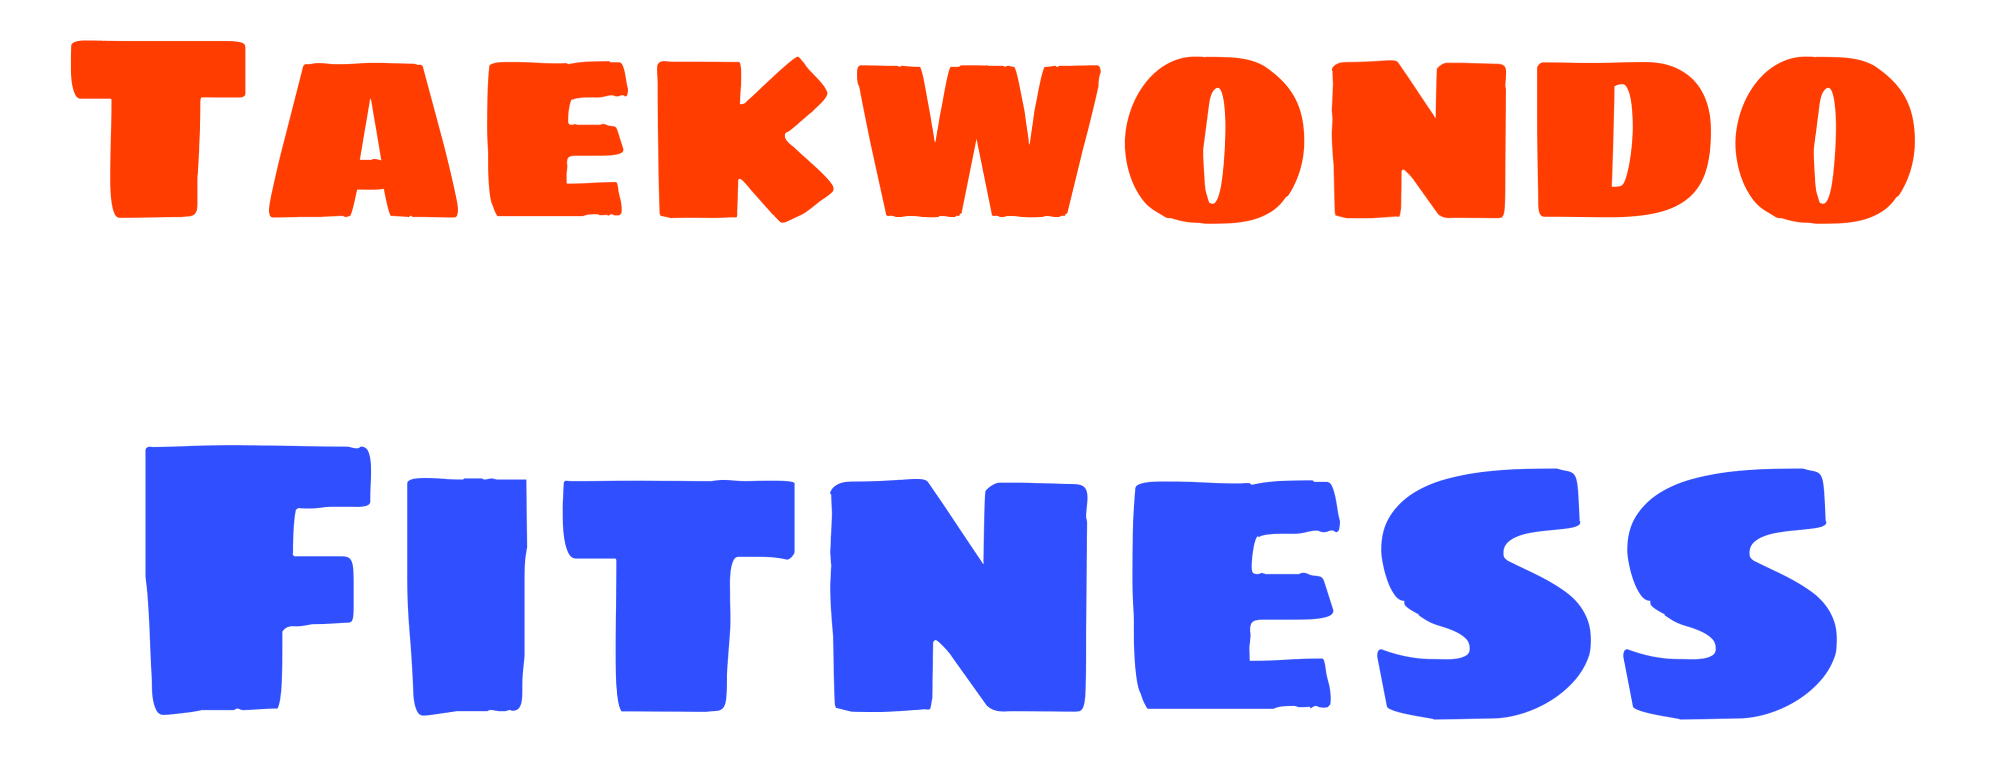 Taekwondo4Fitness